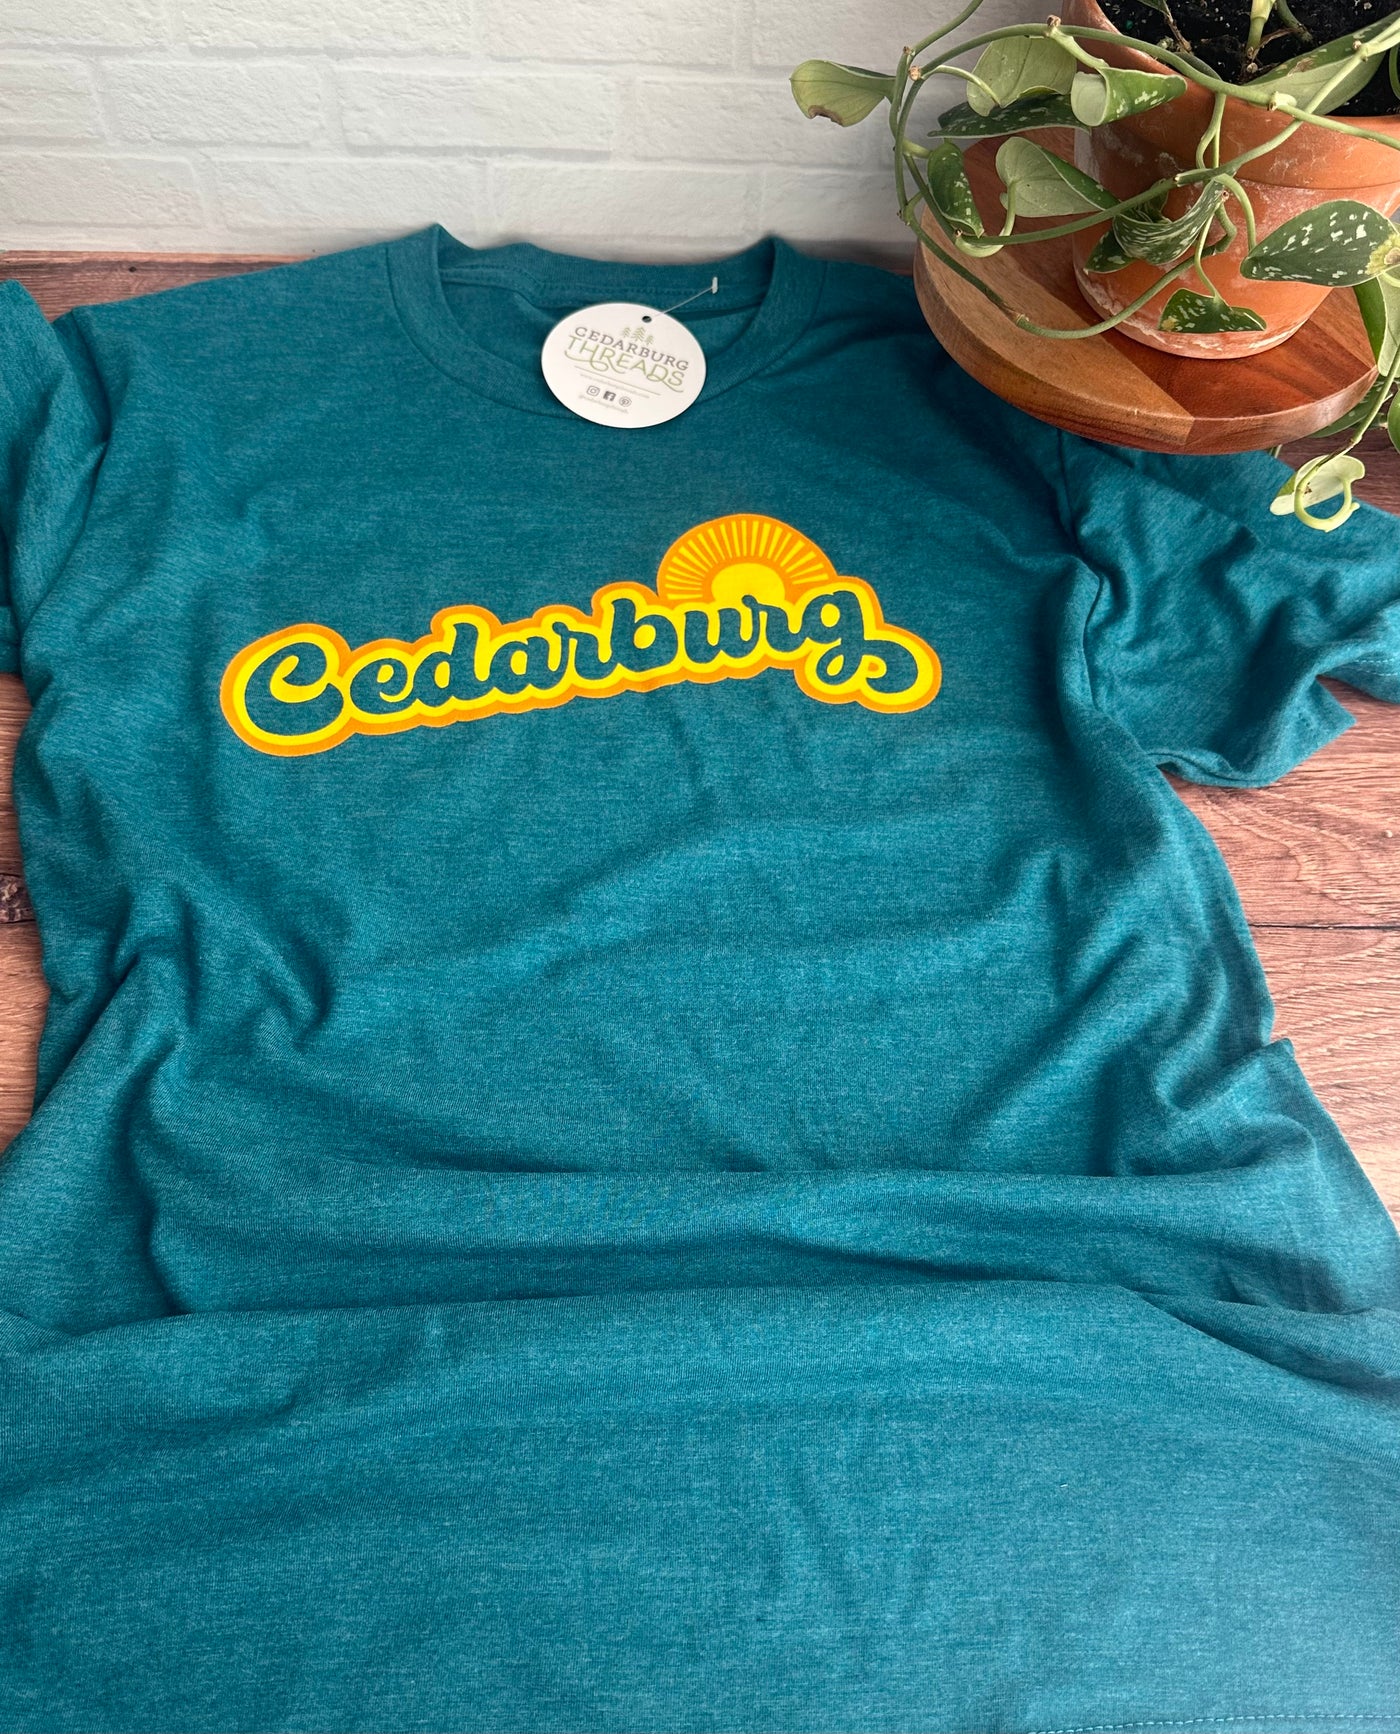 Teal triblend unisex short sleeve crewneck t-shirt with Cedarburg sun design in yellow and orange